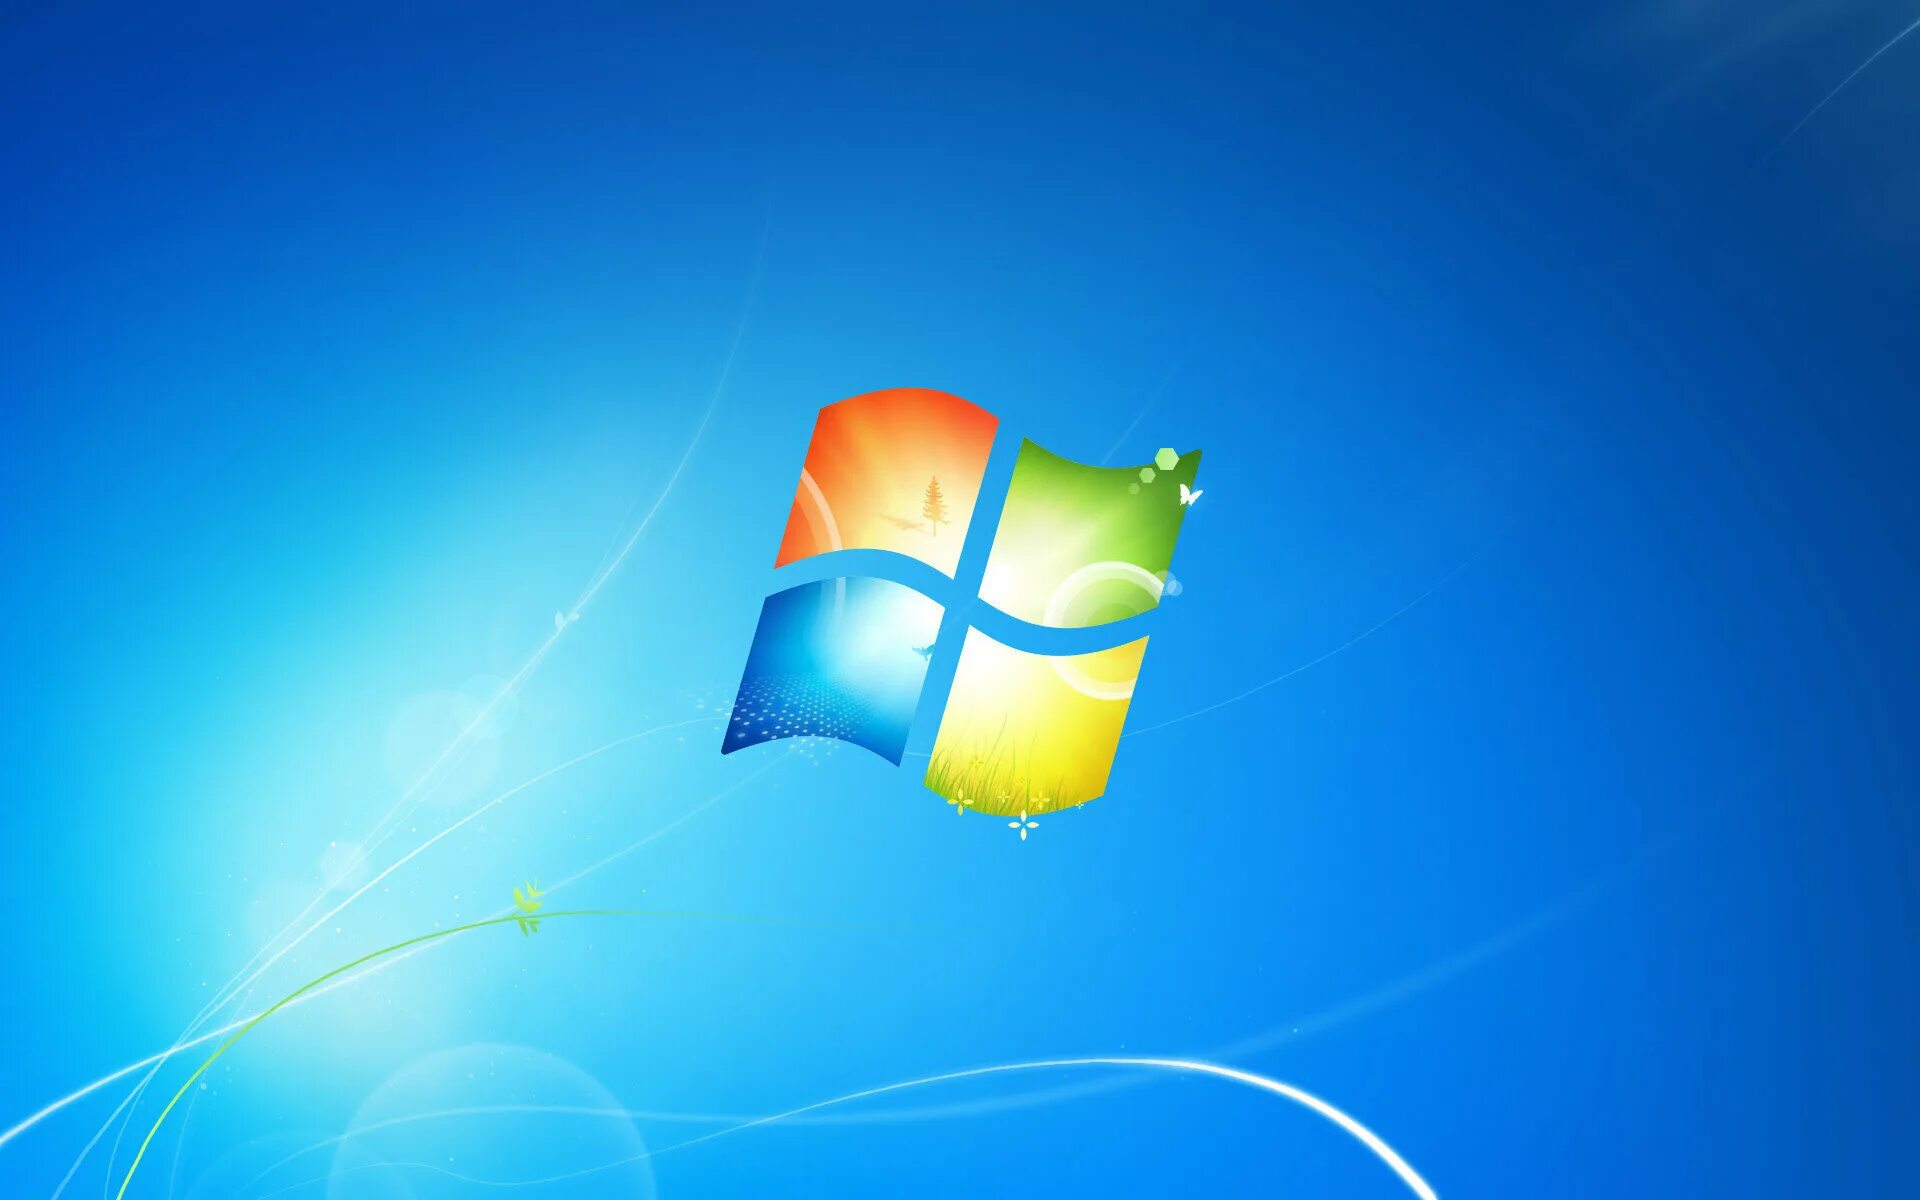 Windows семерка. Виндовс 7. Обои Windows 7. Заставка на рабочий стол стандартная. Windows 7 рабочий стол.